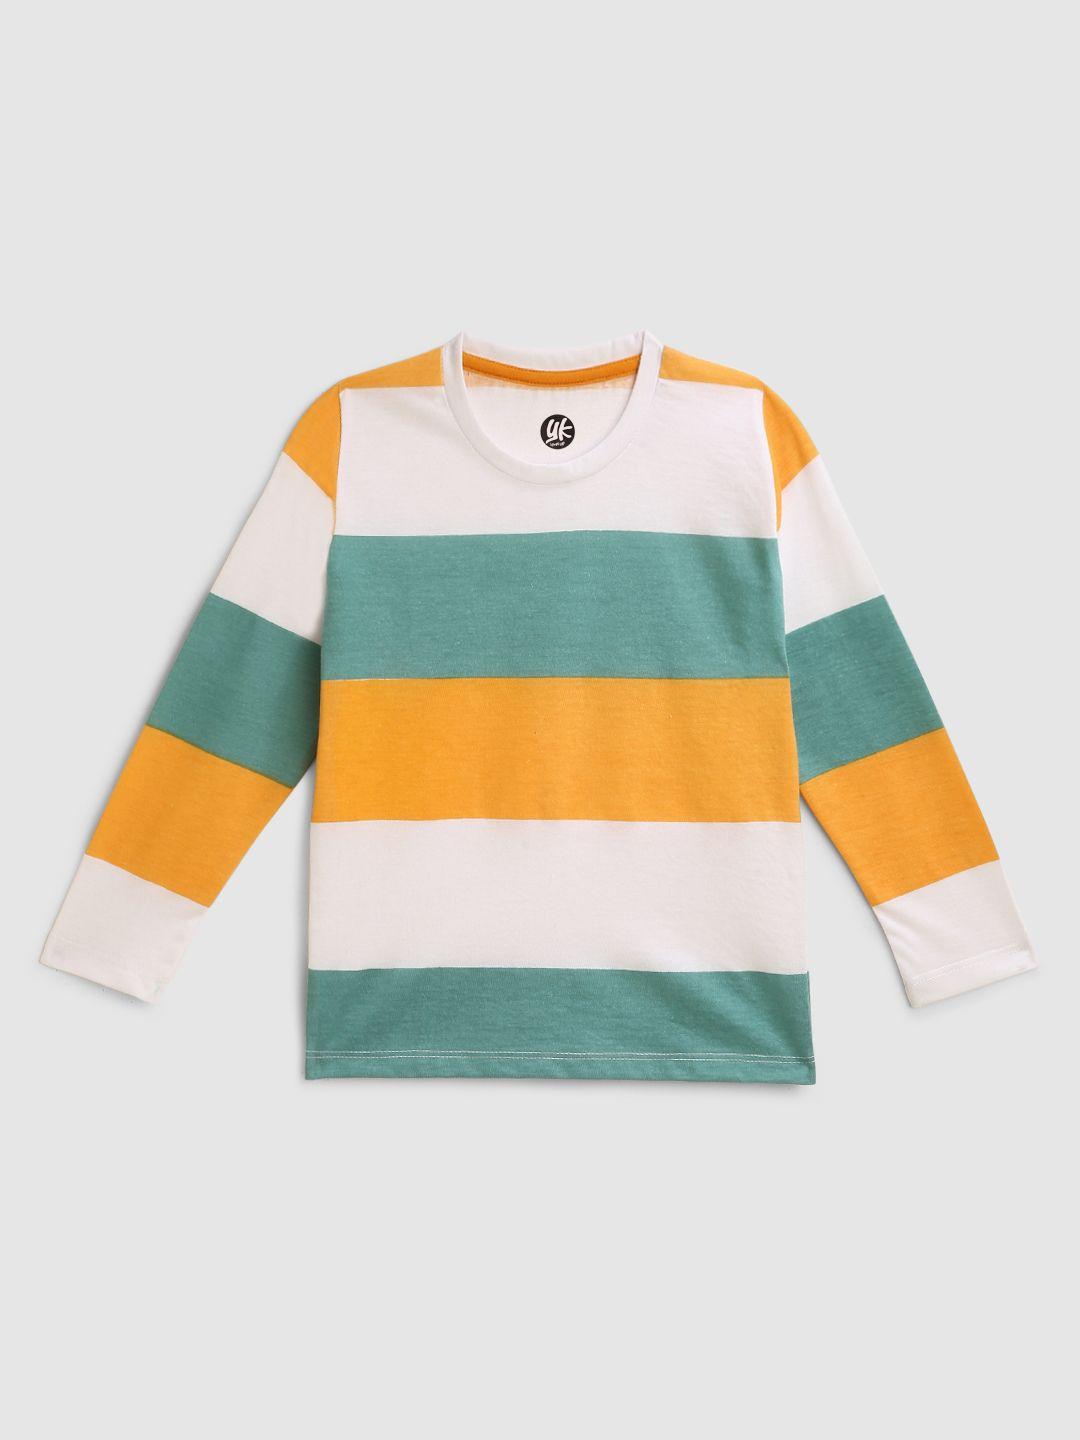 yk boys white orange & olive green horizontal colour blocked striped t-shirt